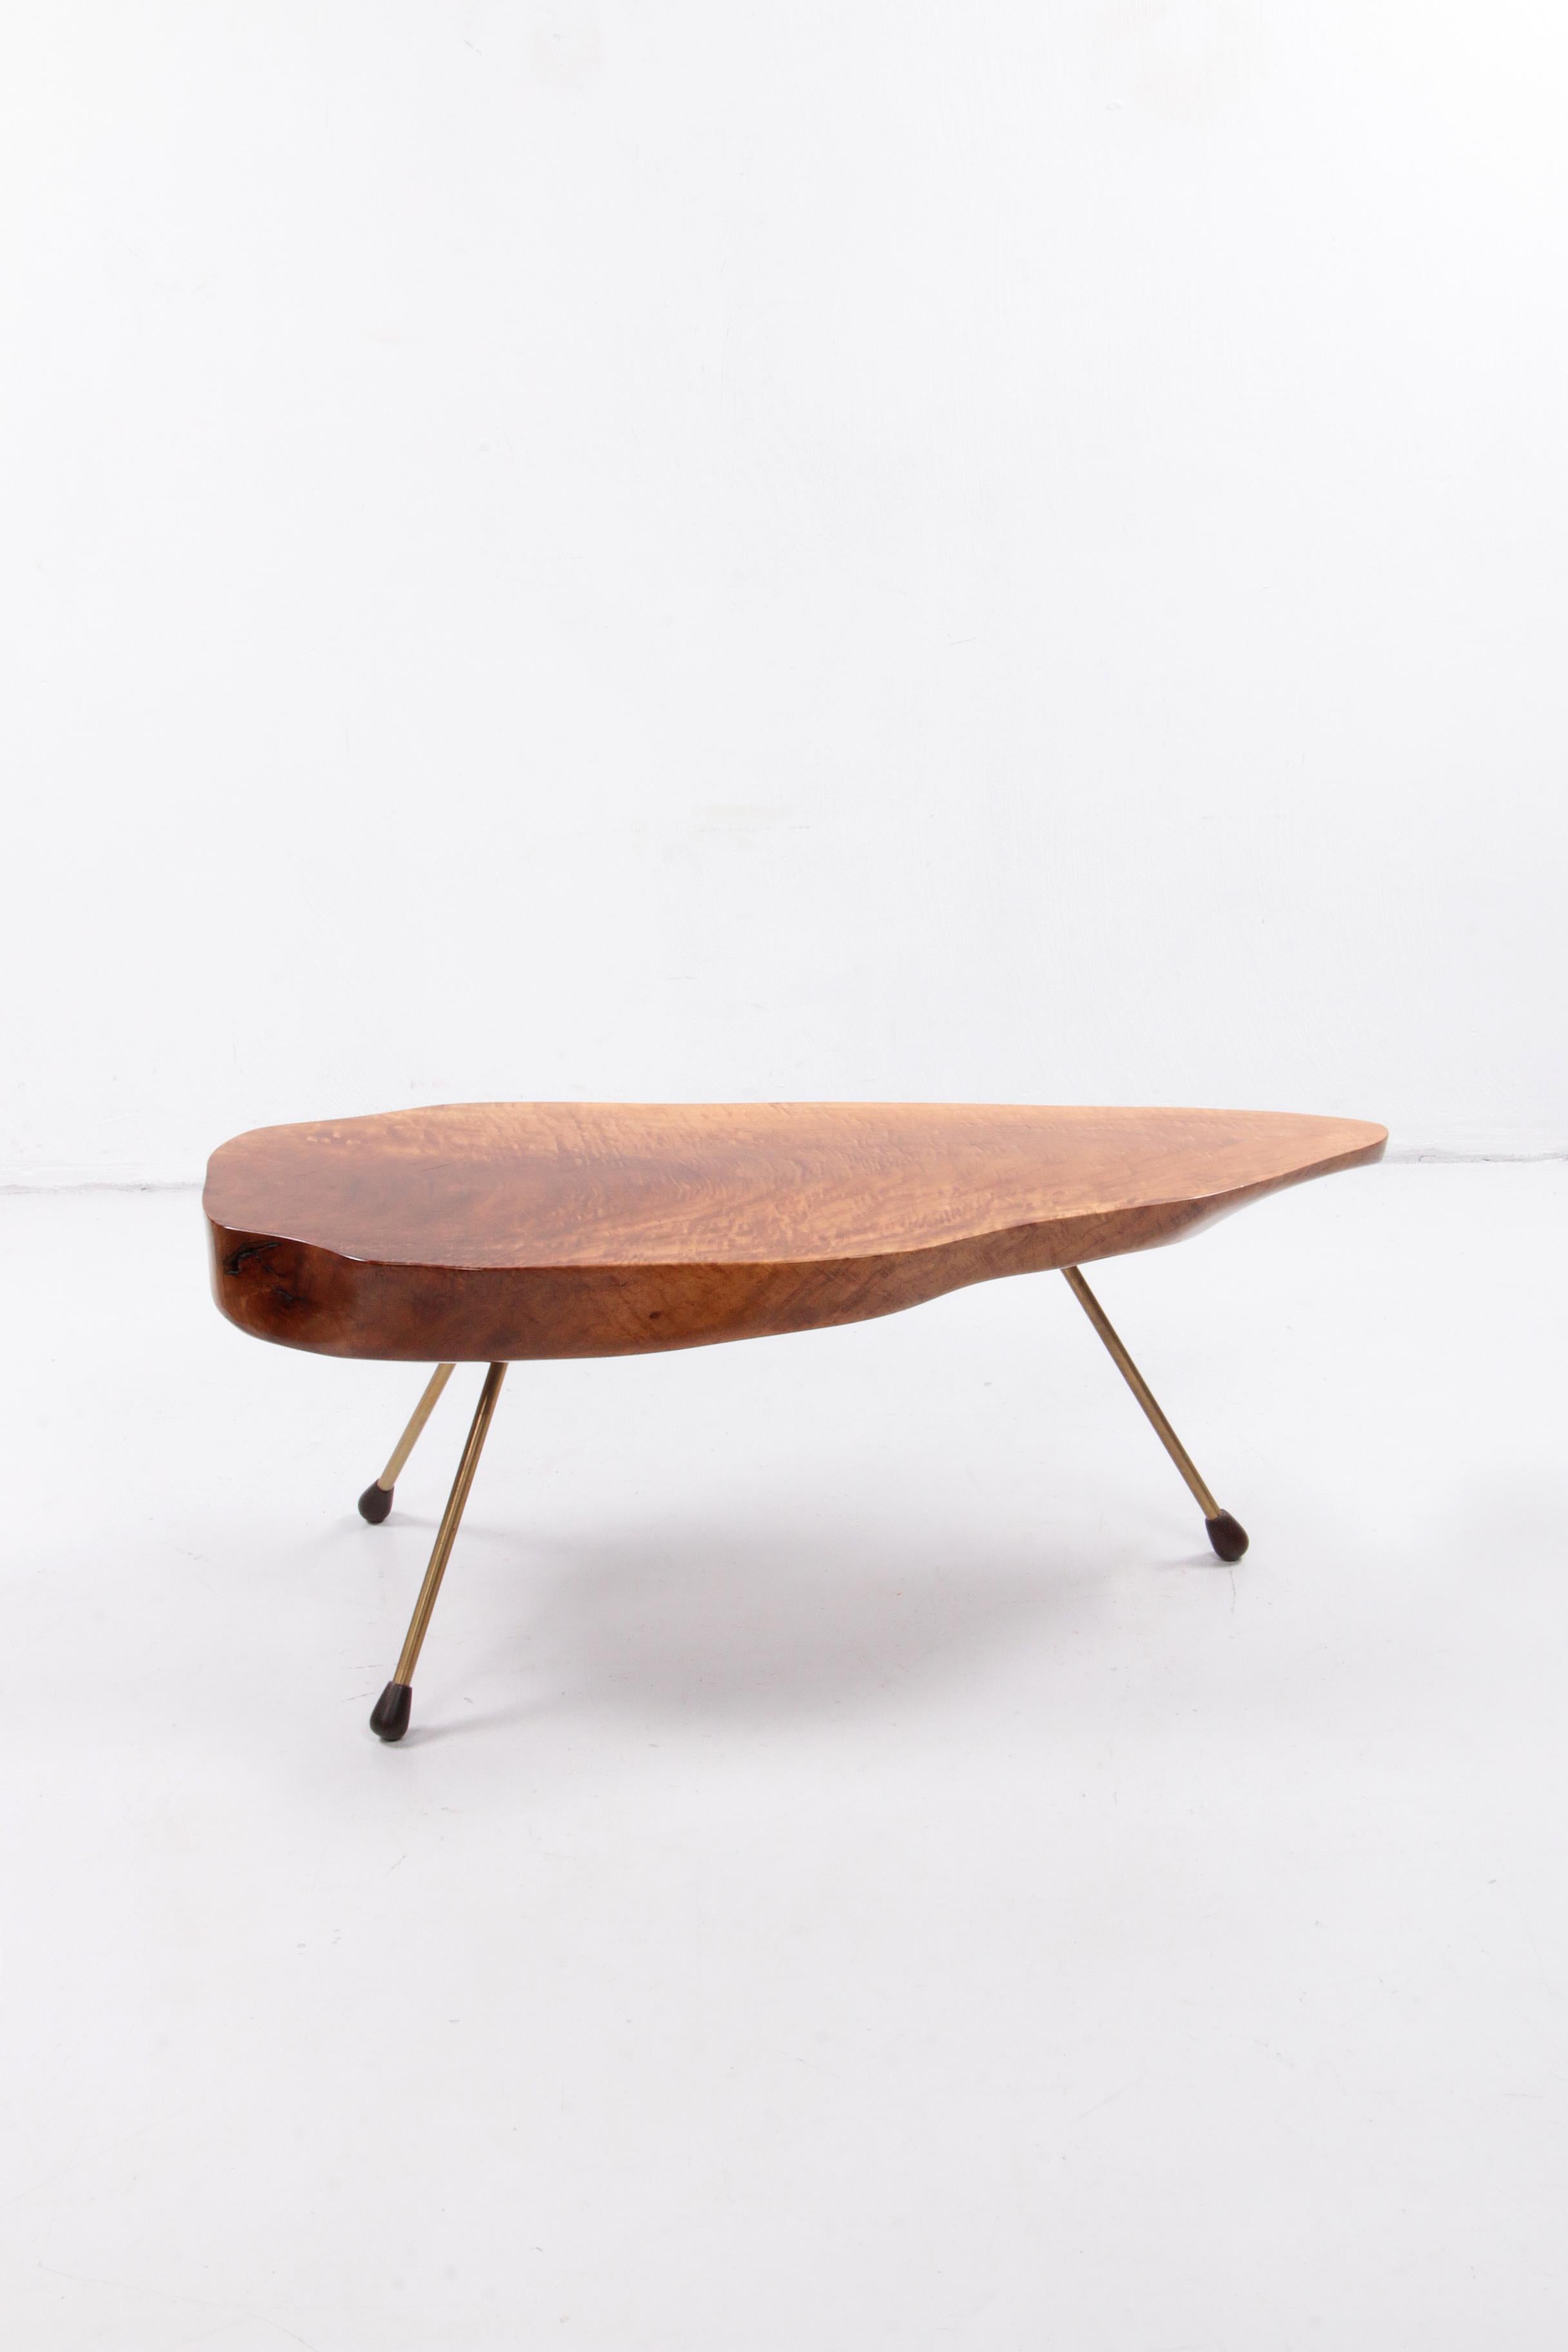 Mid-20th Century Design Coffee Table Walnut with Copper Legs, 1950s Austria